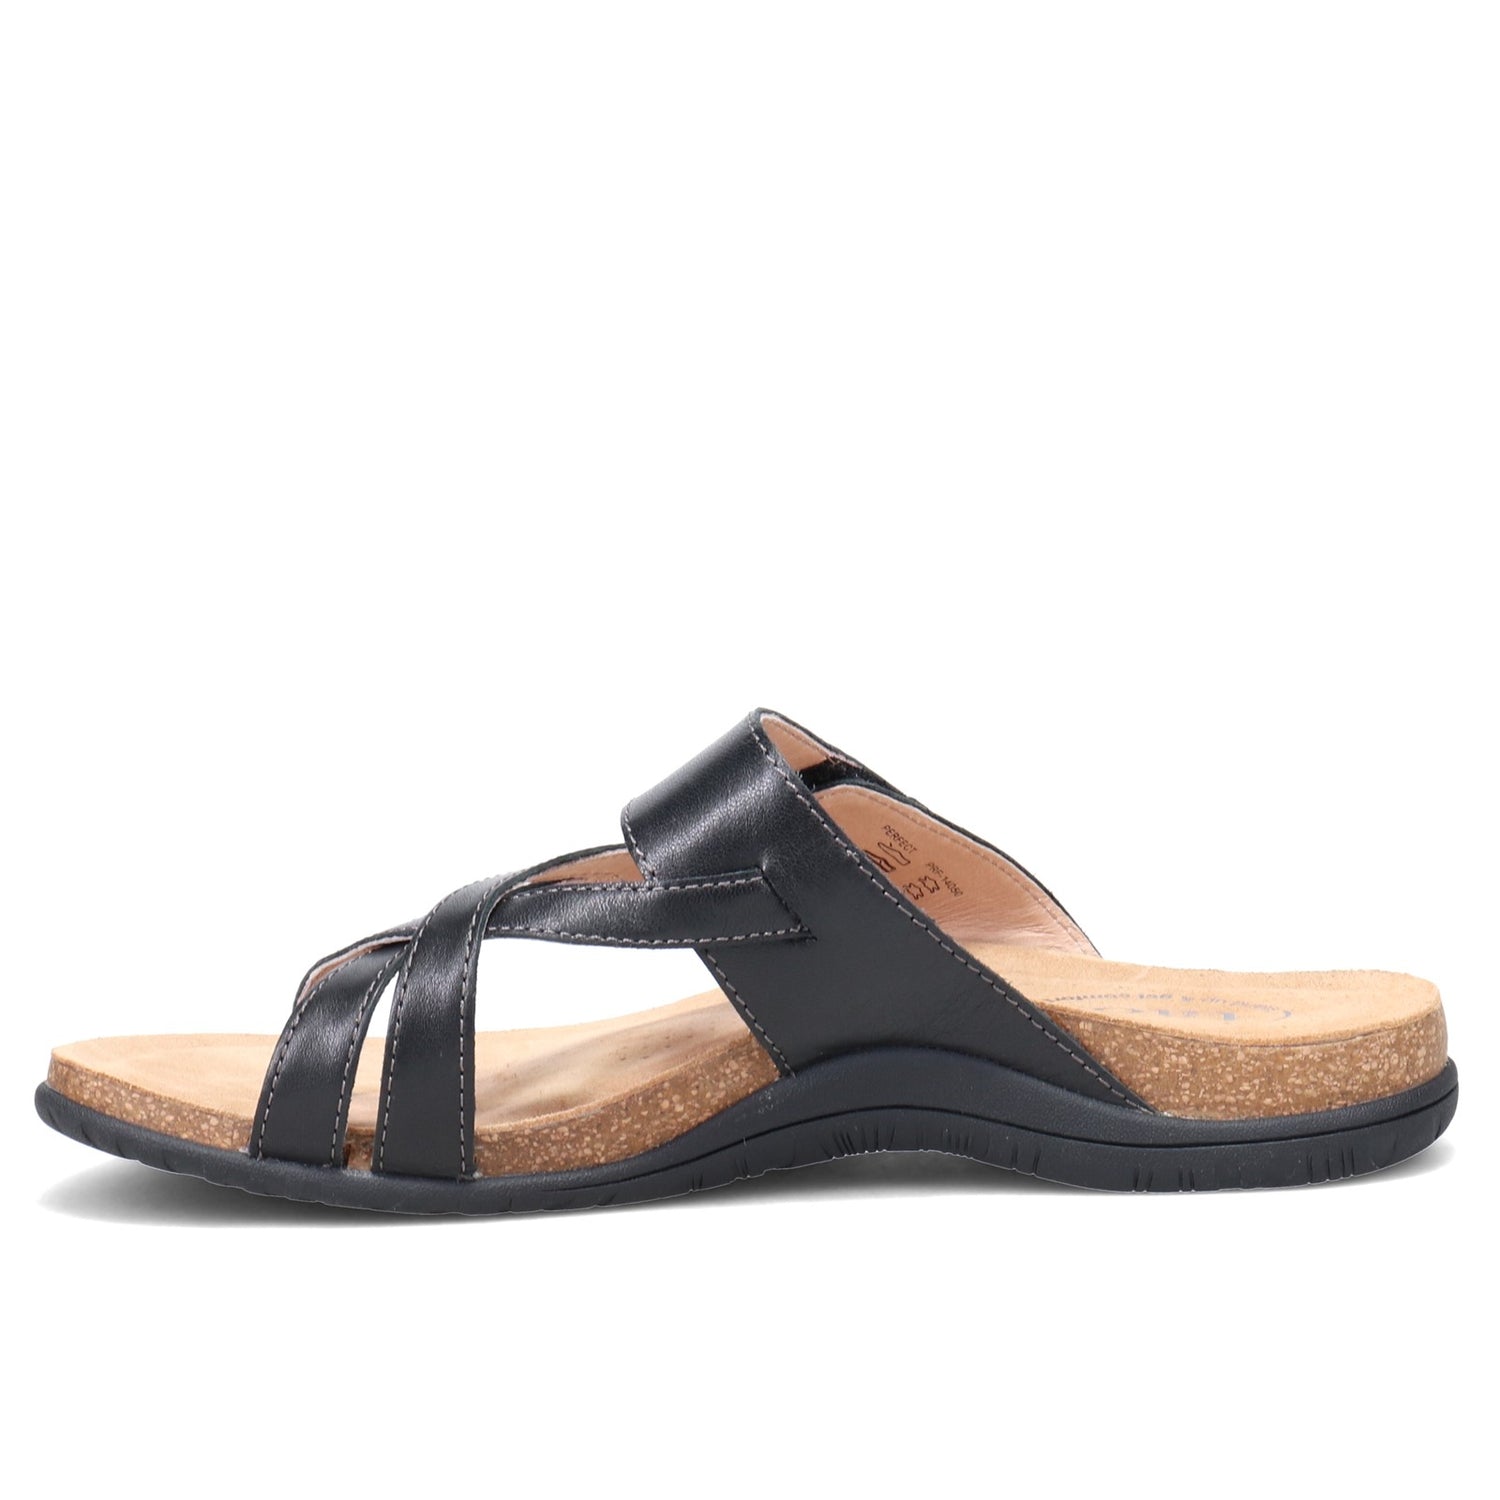 Peltz Shoes  Women's Taos Perfect Sandal Black PRF-14050-BLK